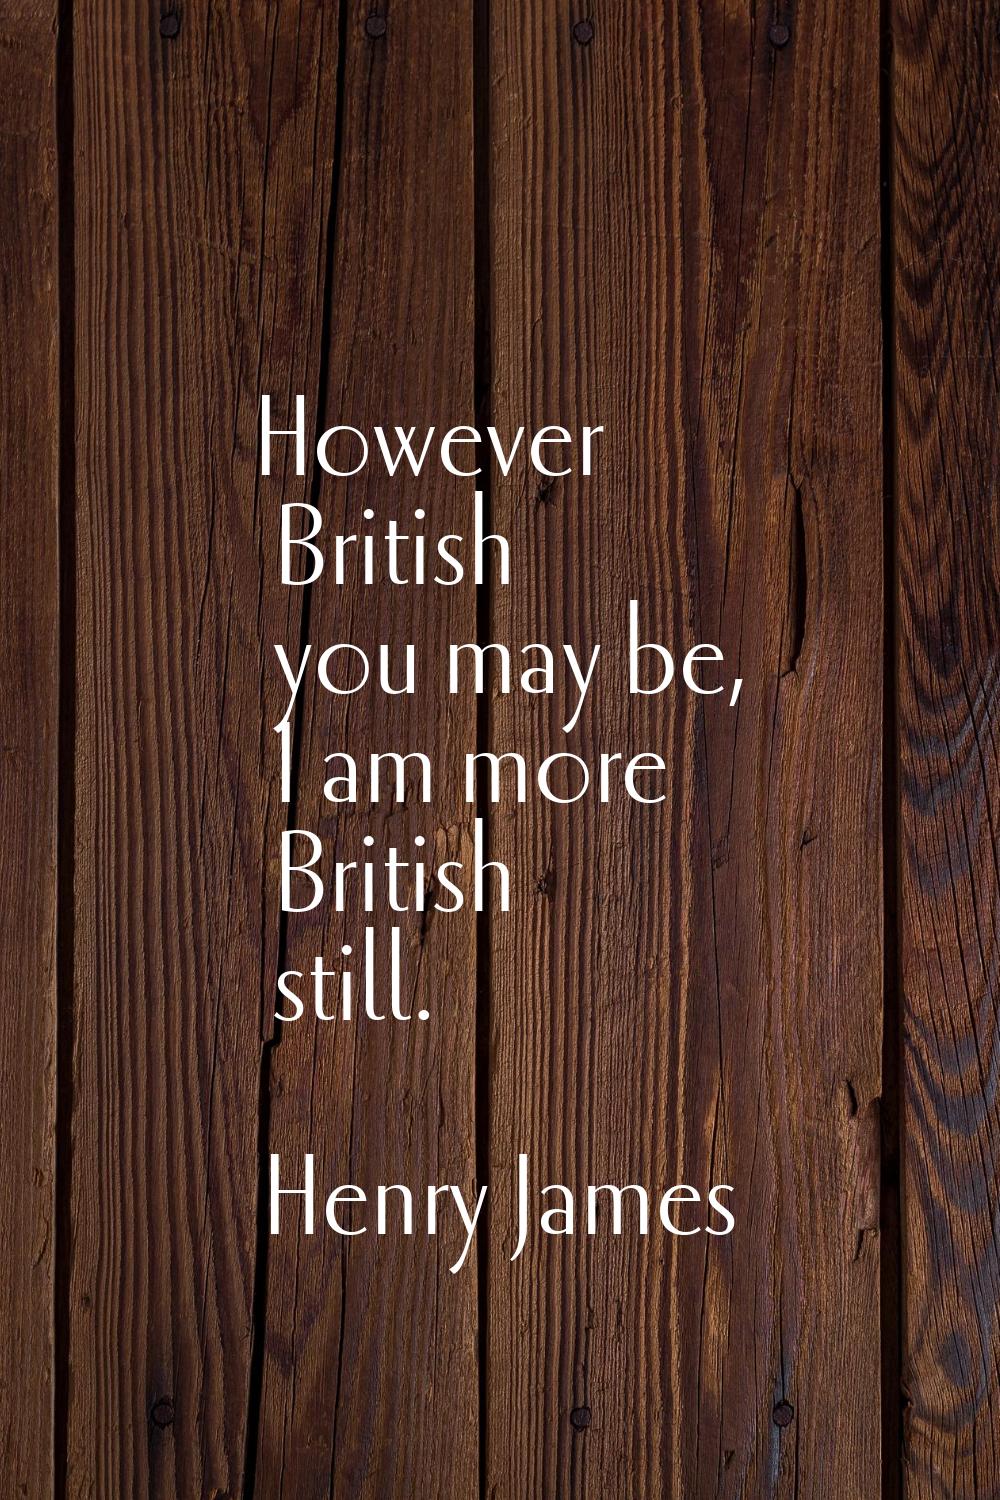 However British you may be, I am more British still.